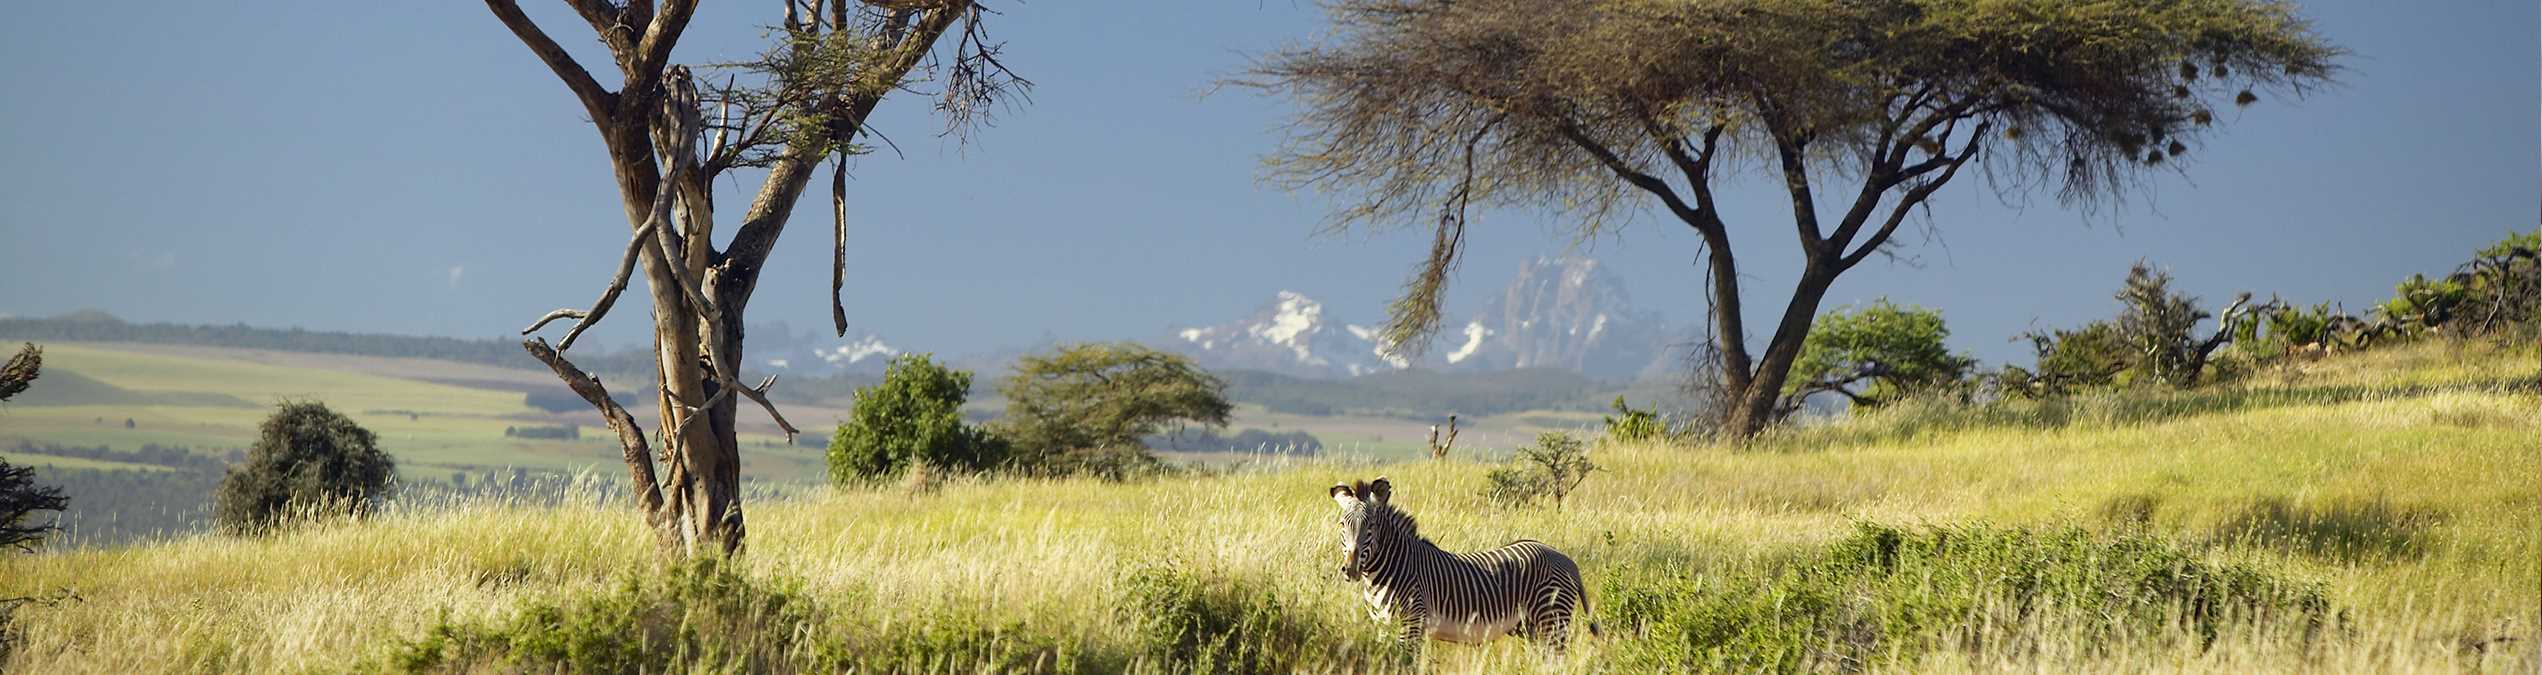 Safari Club - Kenya_Lewa Downs